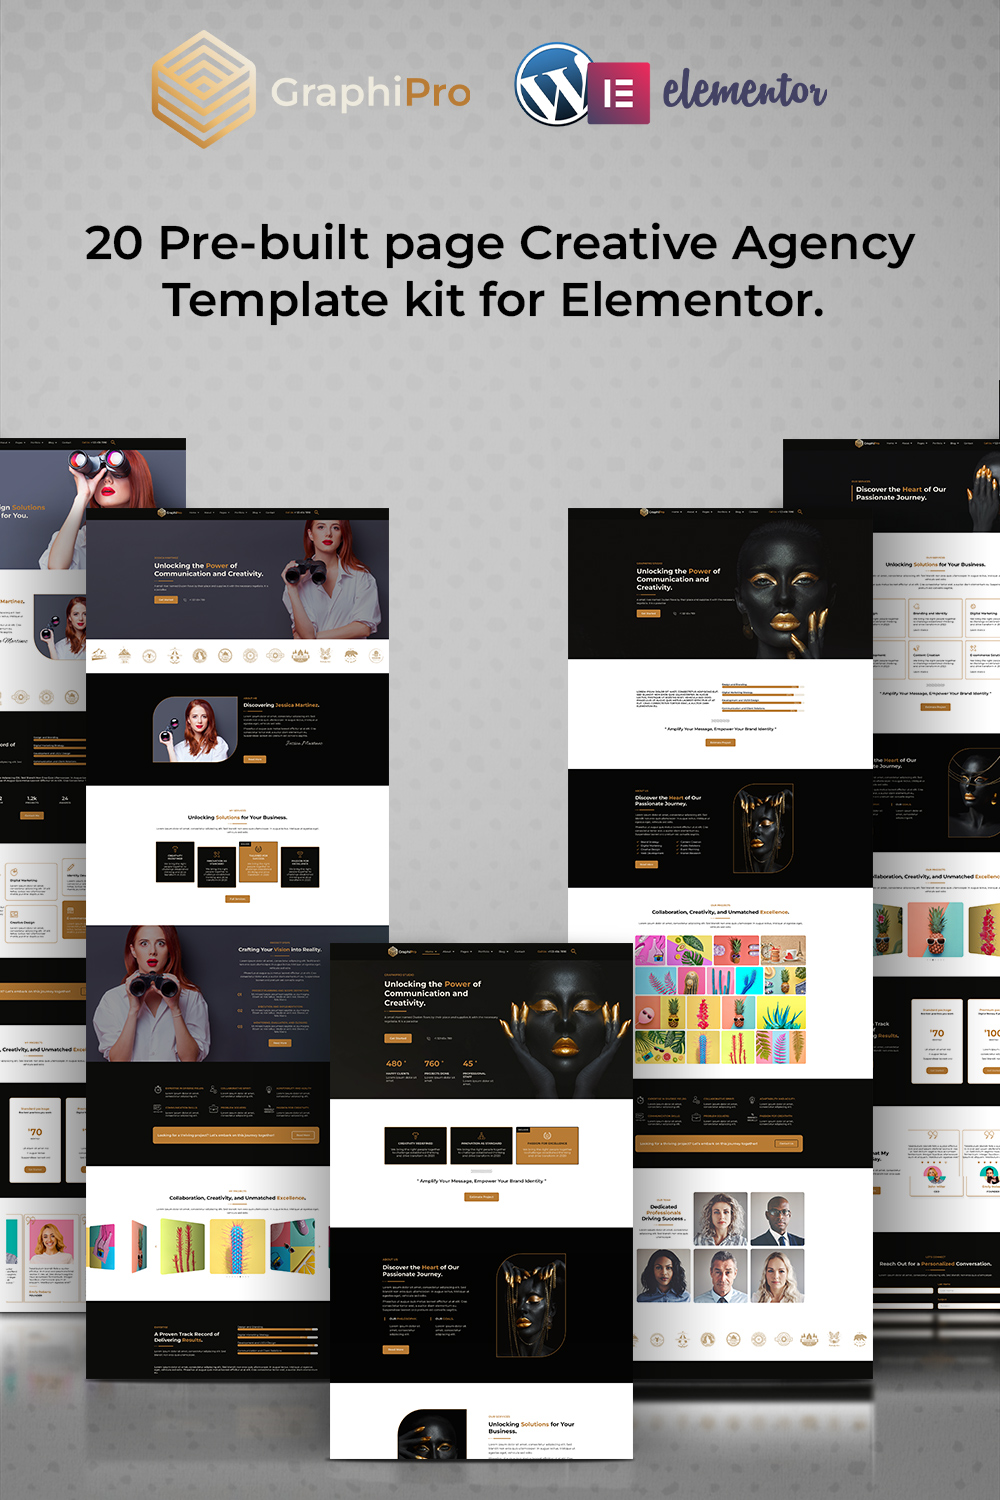 GraphiPro - Premium Digital Agency Elementor Template Kit pinterest preview image.